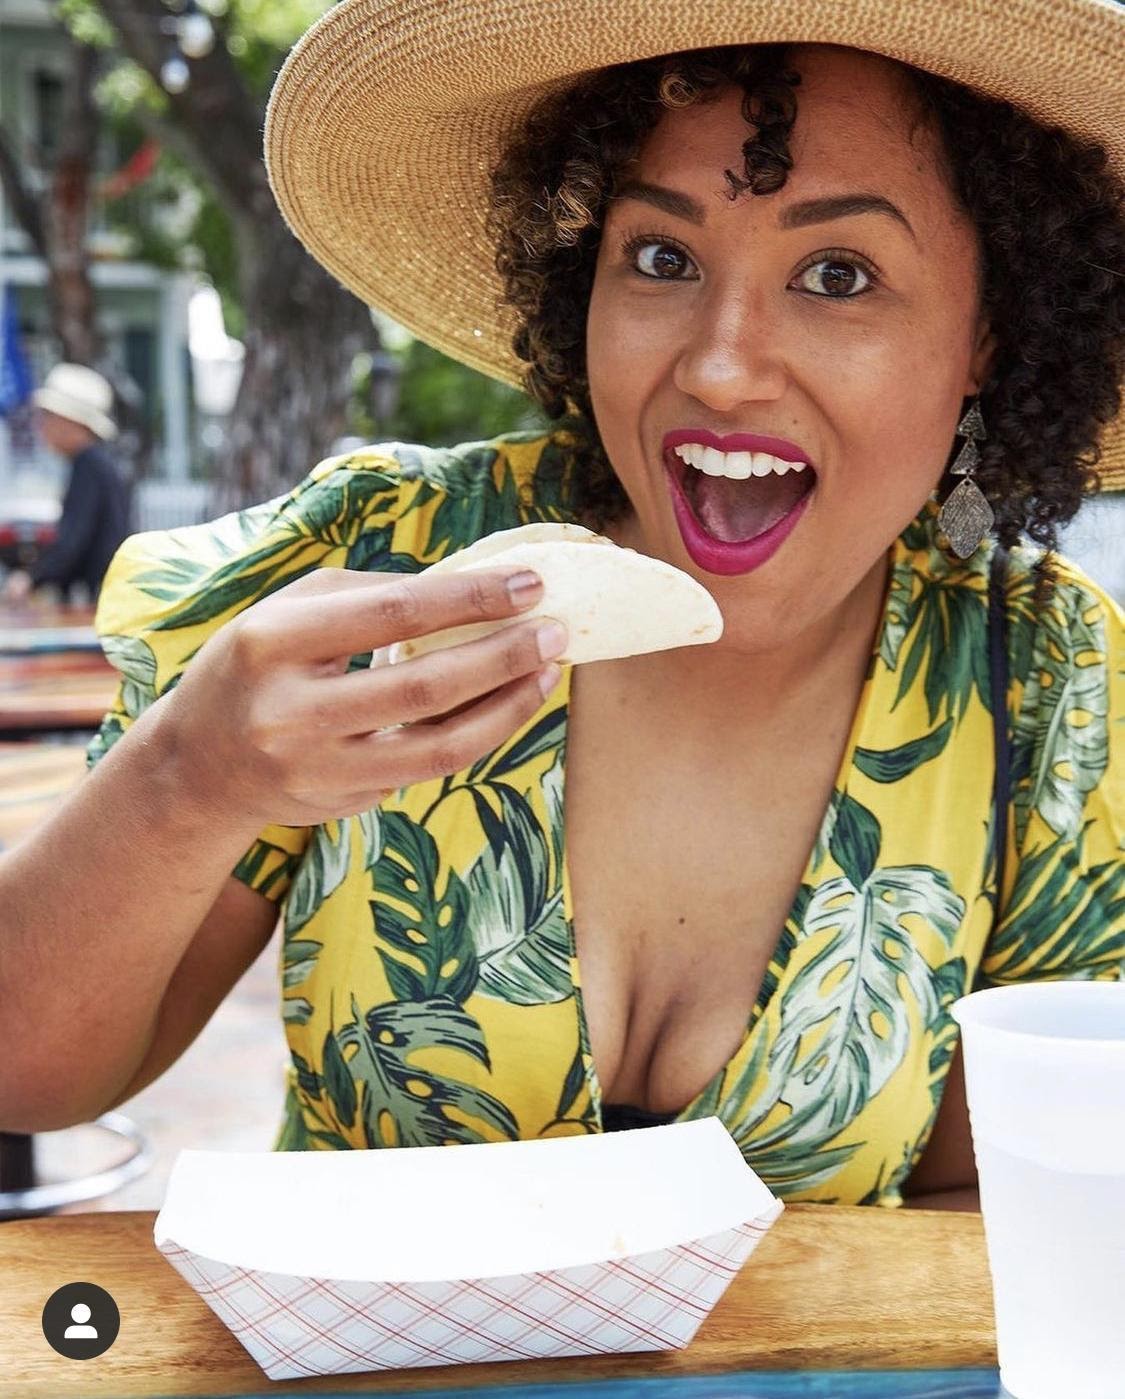 Woman enjoying a taco